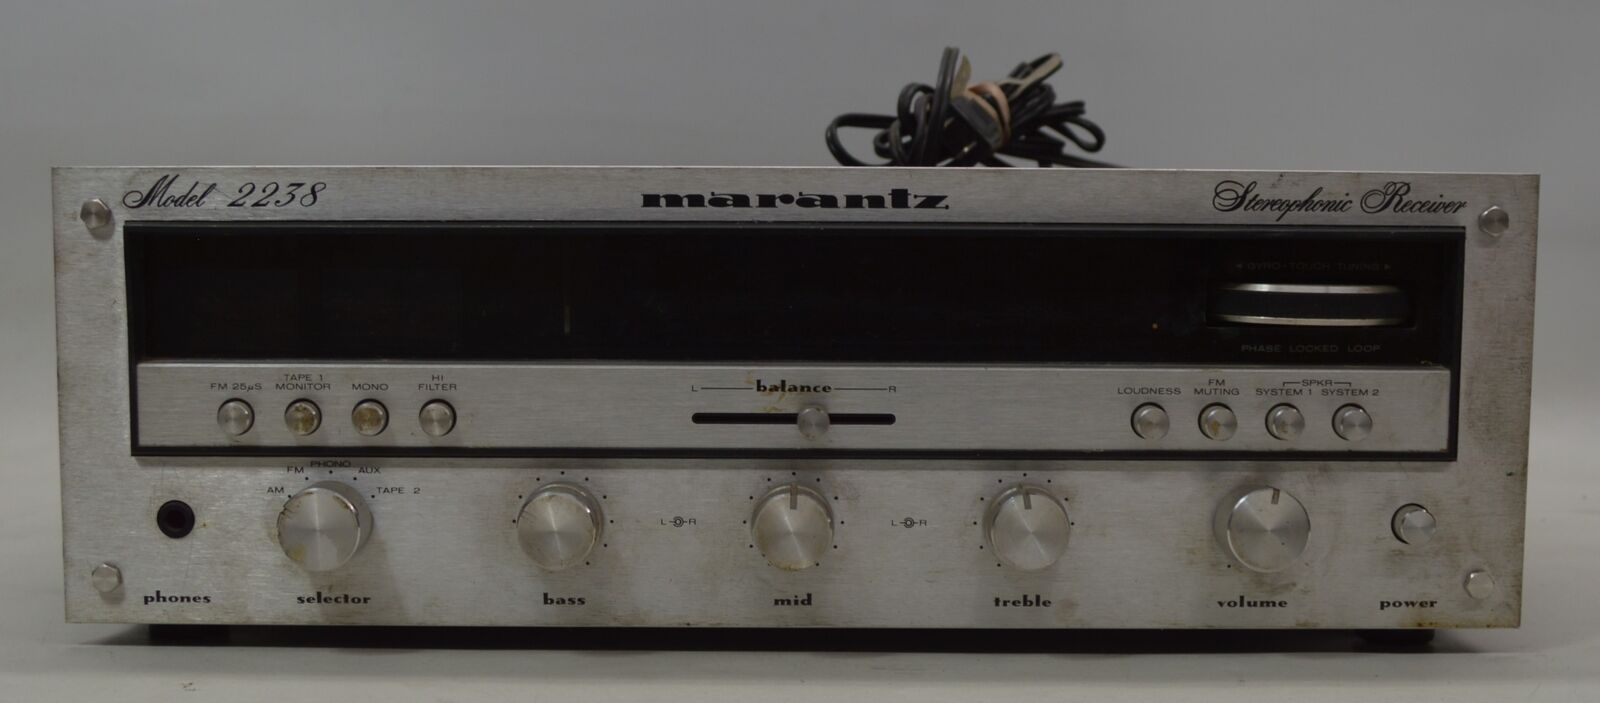 Vintage Marantz 2238 Stereo Receiver